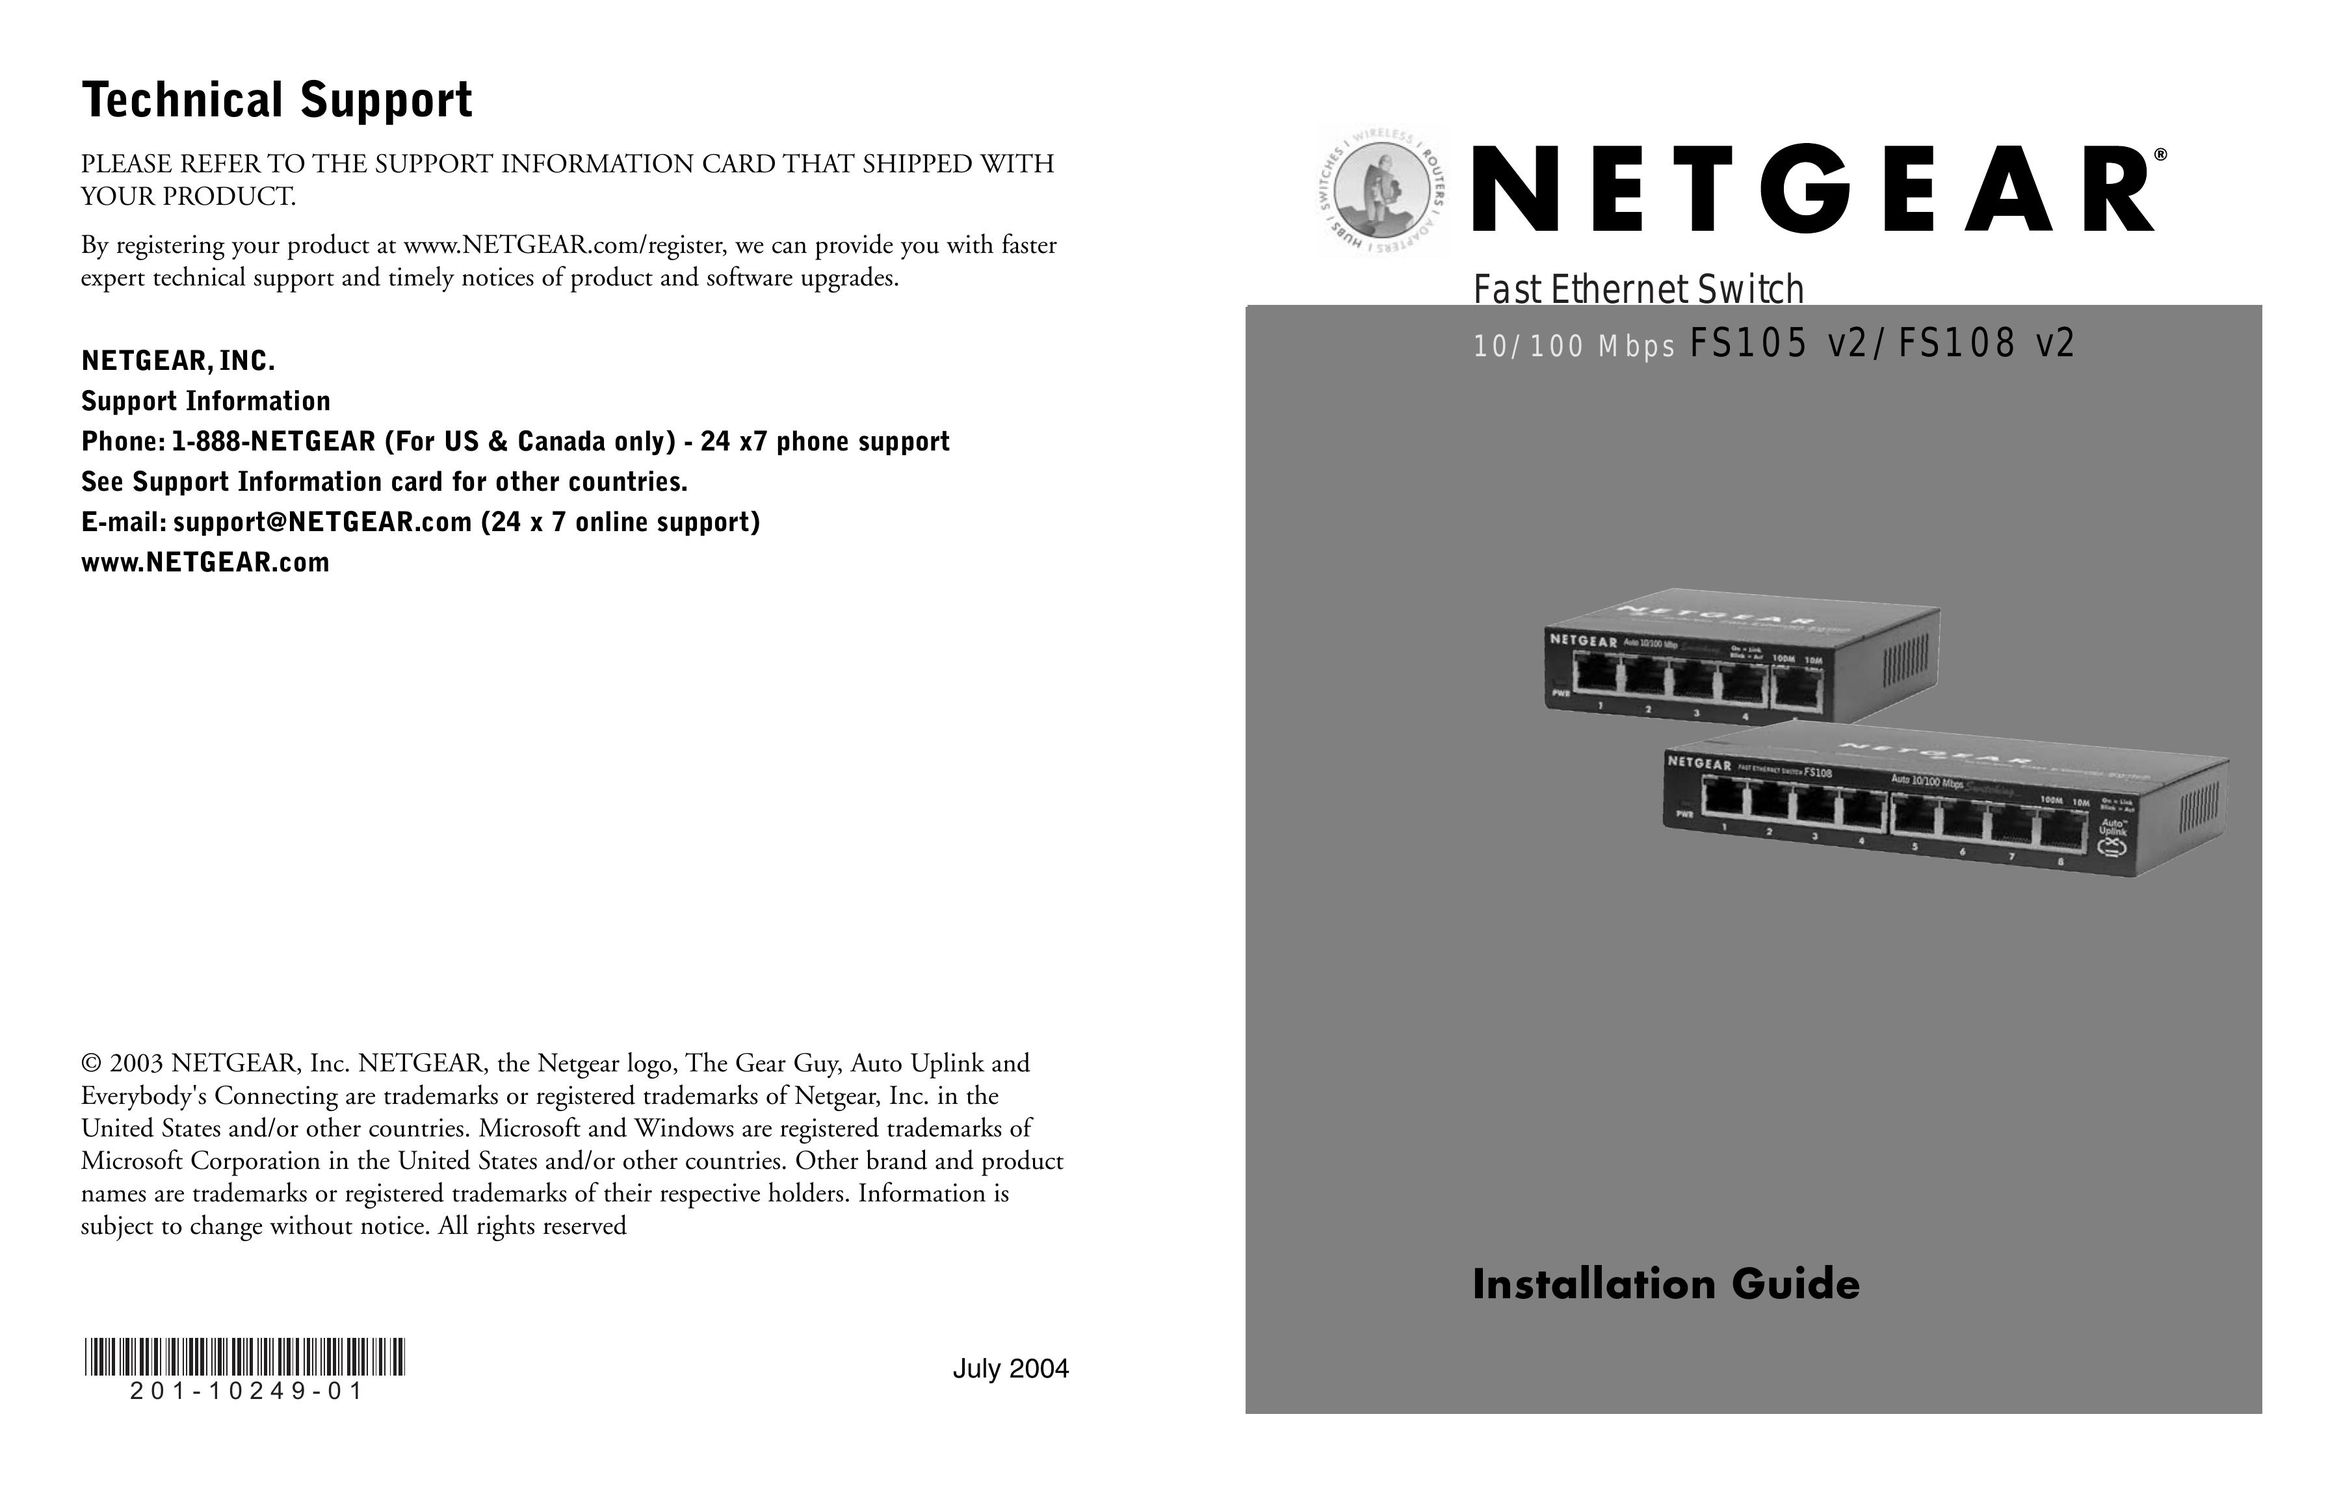 NETGEAR FS105 V2 Switch User Manual